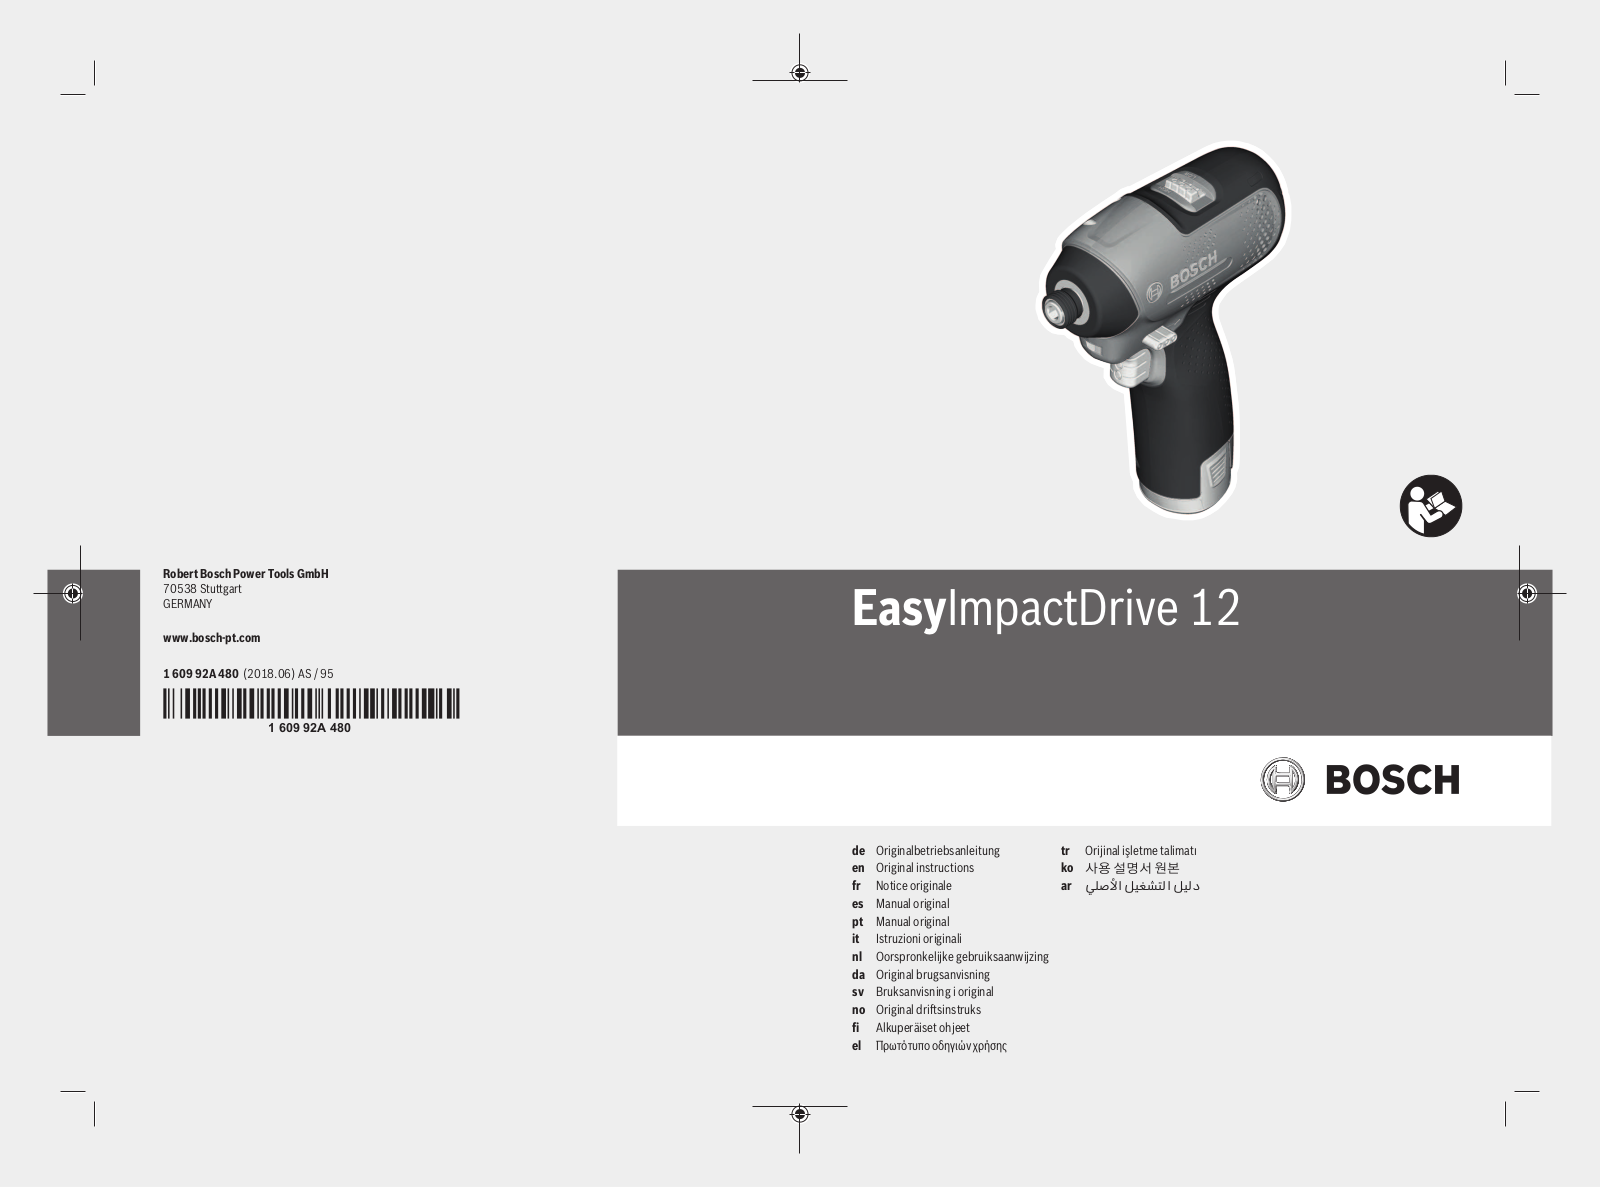 Bosch EasyImpactDrive 12 operation manual